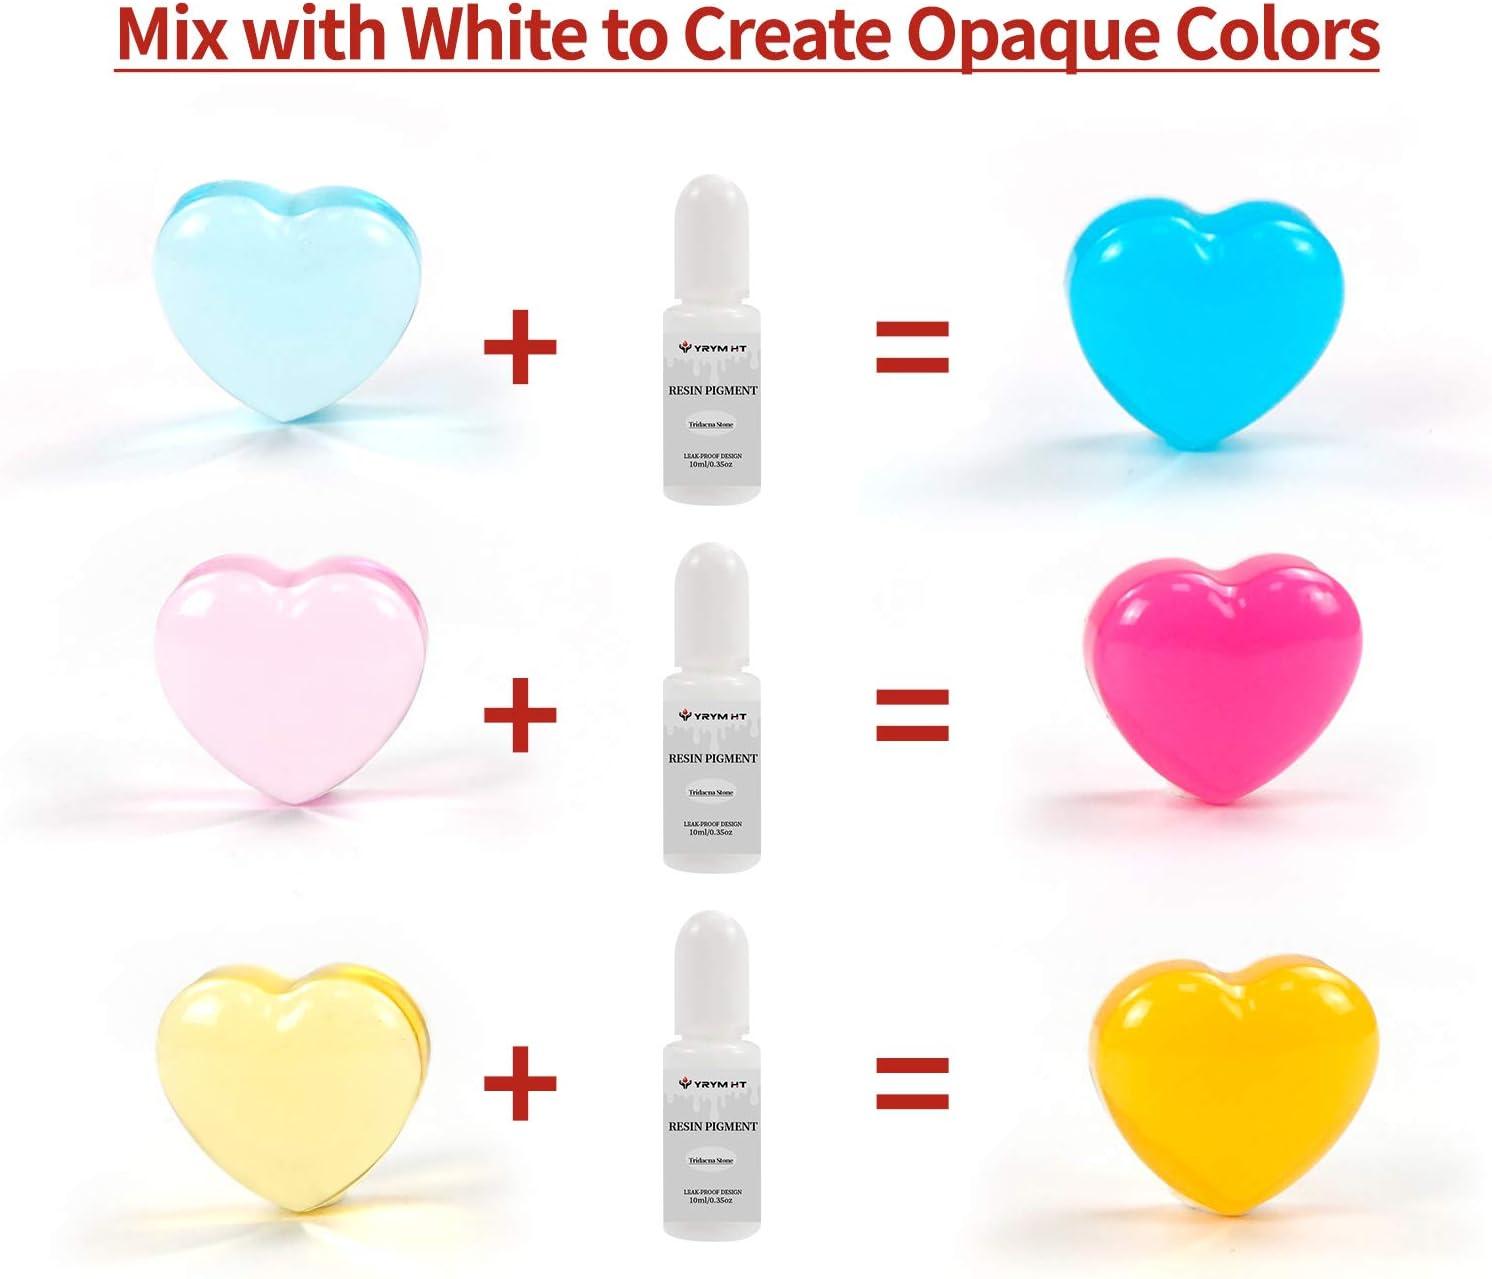 24 Color Liquid Epoxy Resin Dye Epoxy Resin Pigment 24 Colours